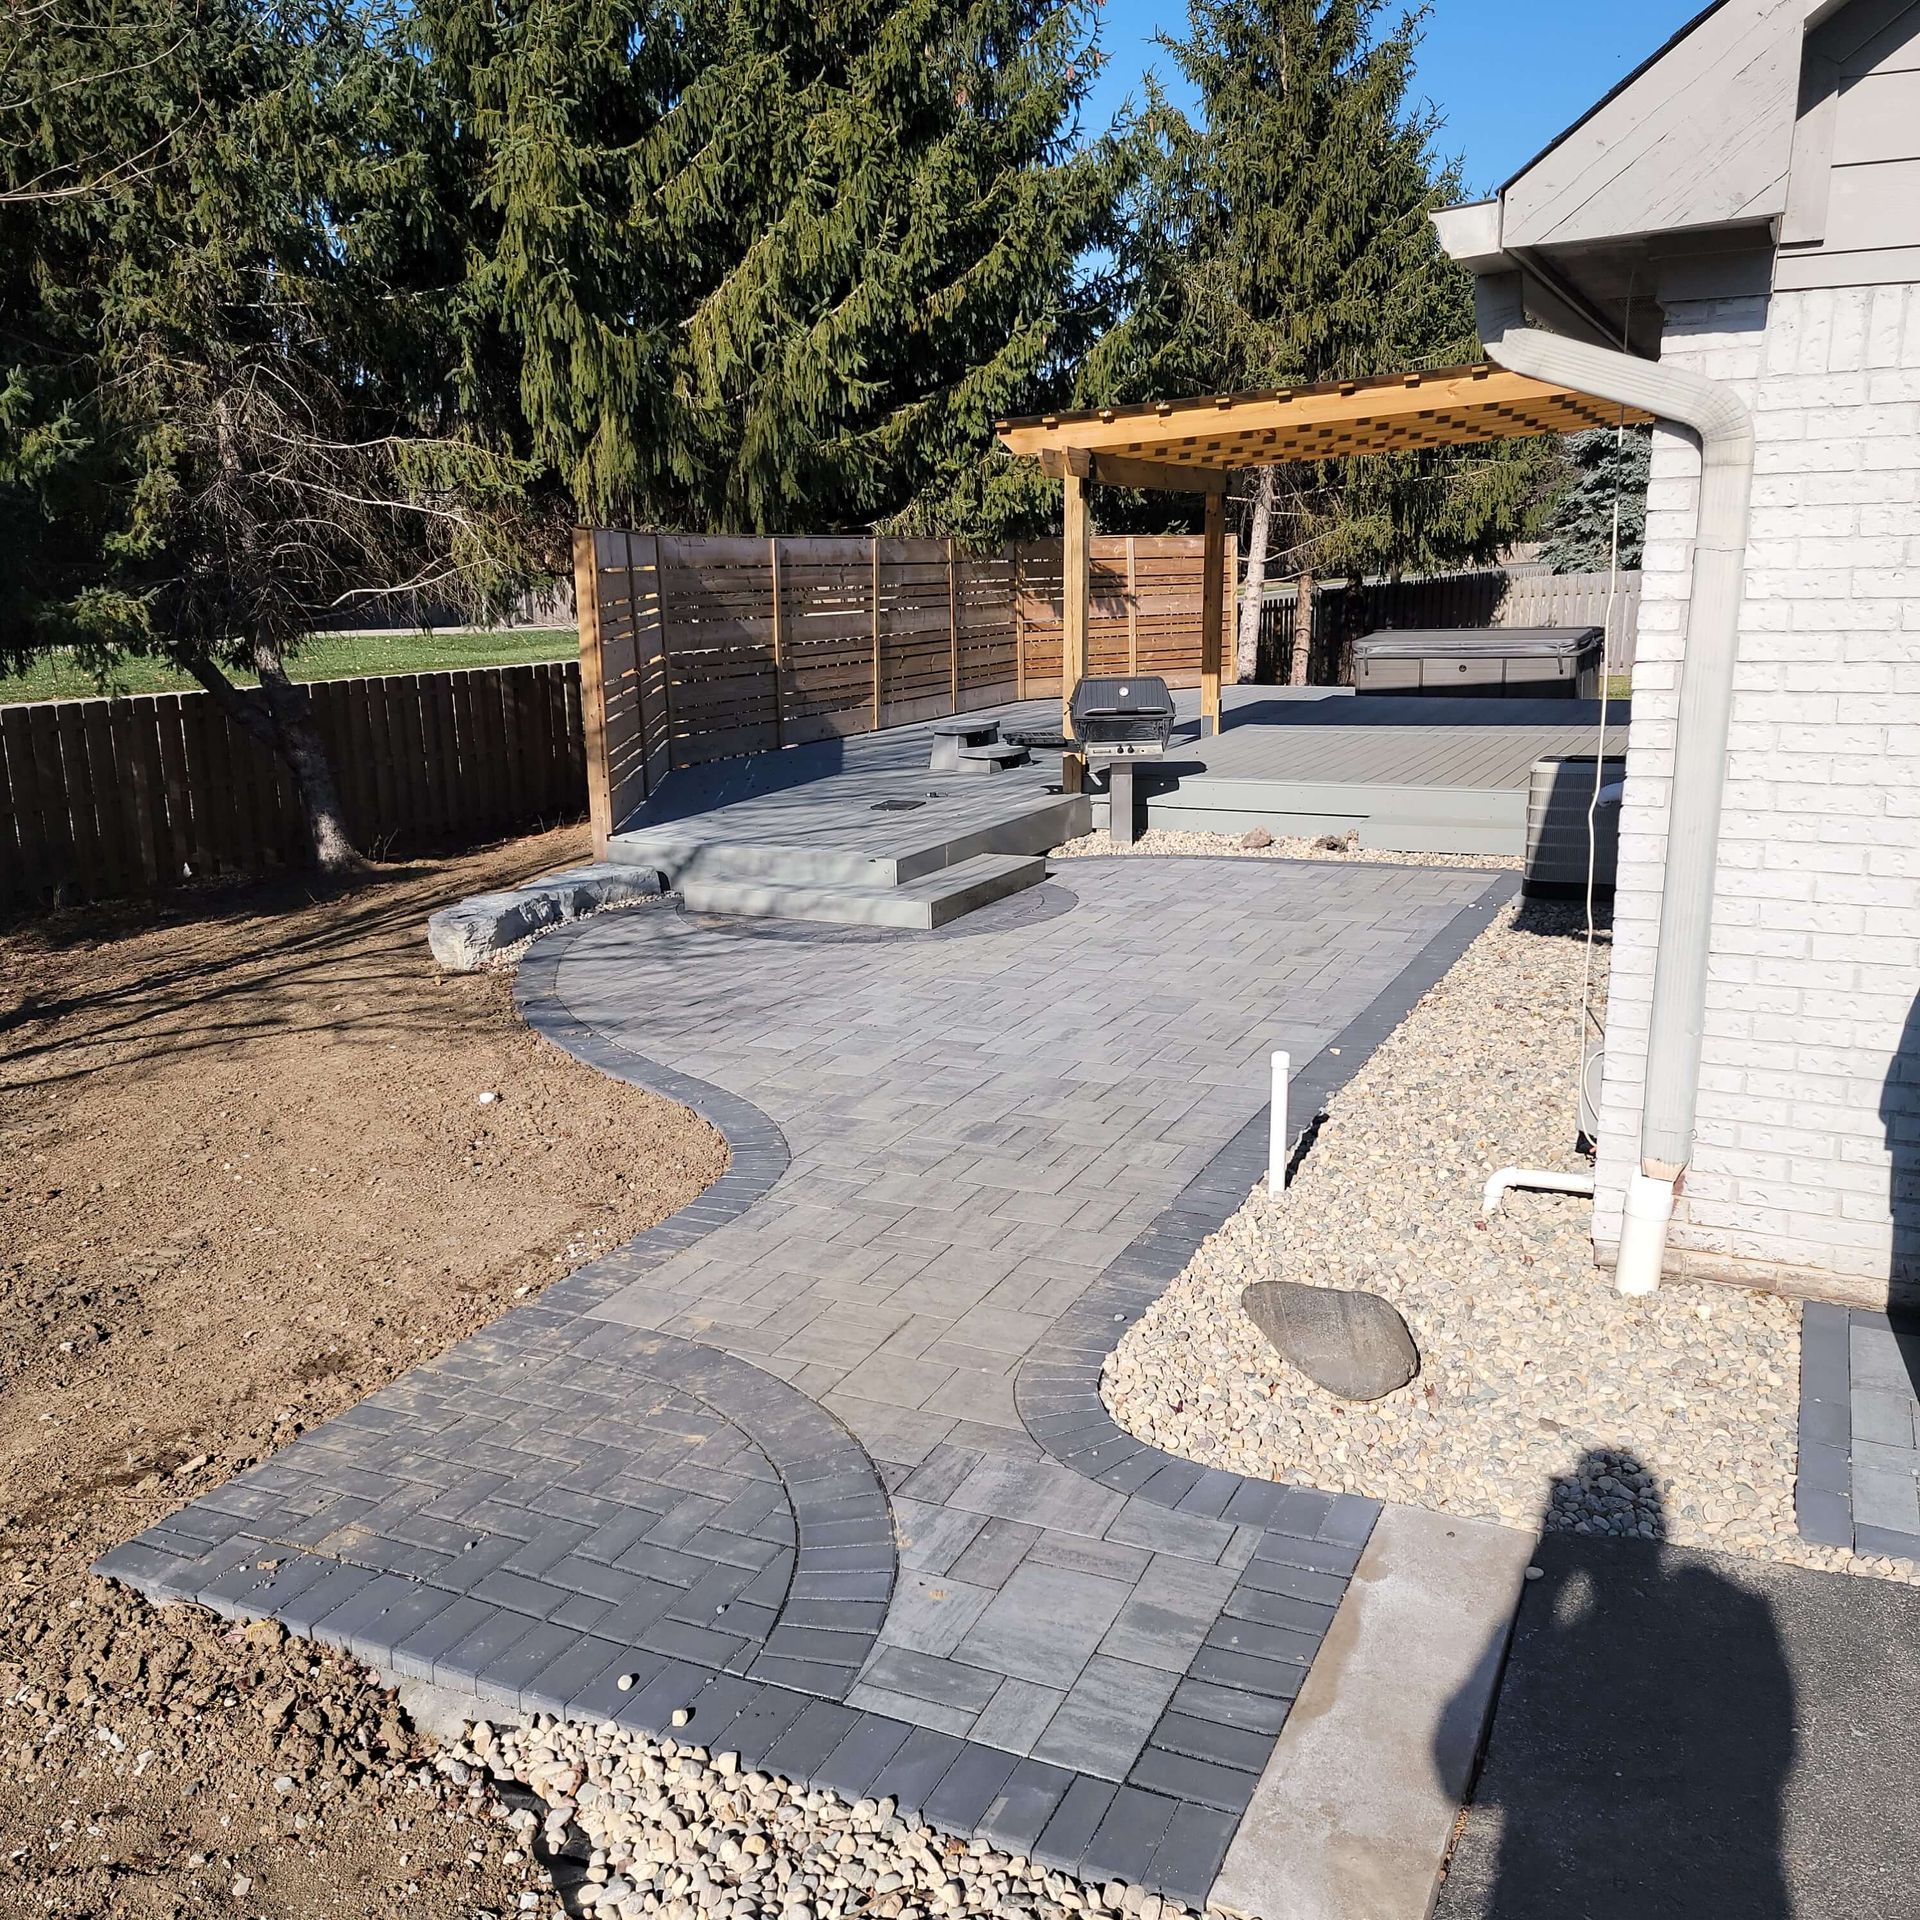 newly installed grey brick patio in indianapolis backyard